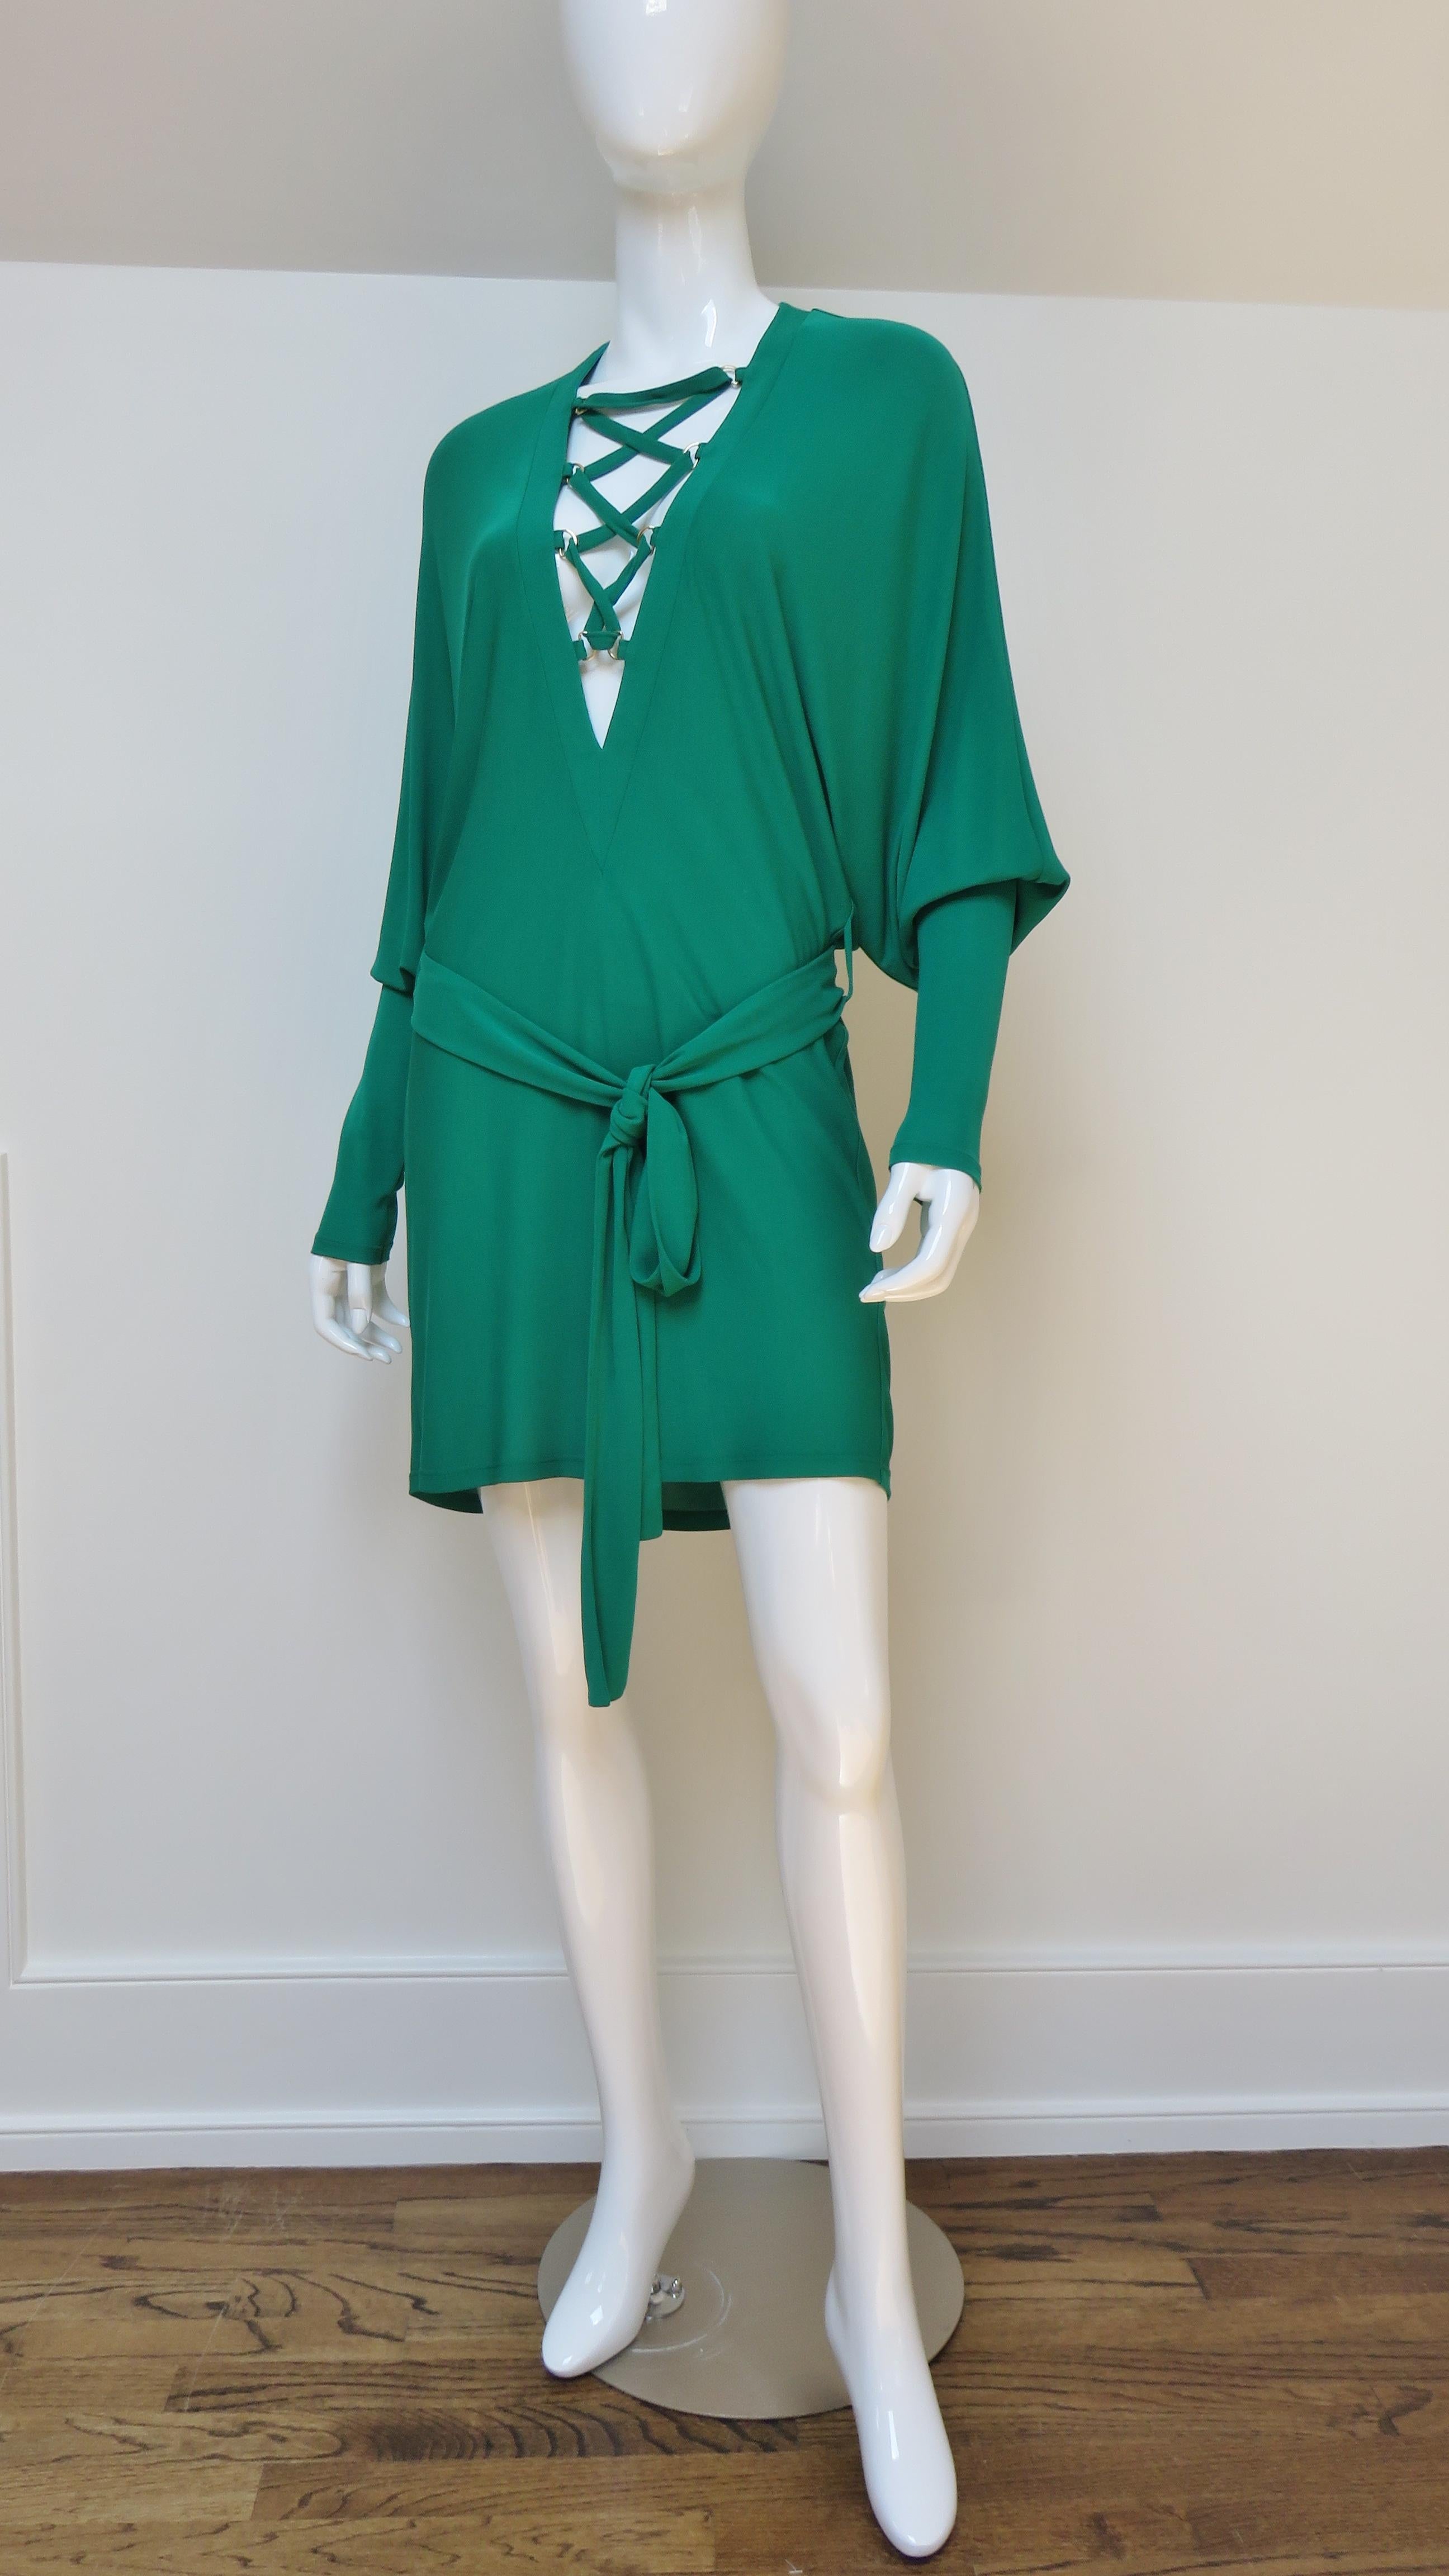 Women's Balmain Emerald Green Lace up Plunge Dress